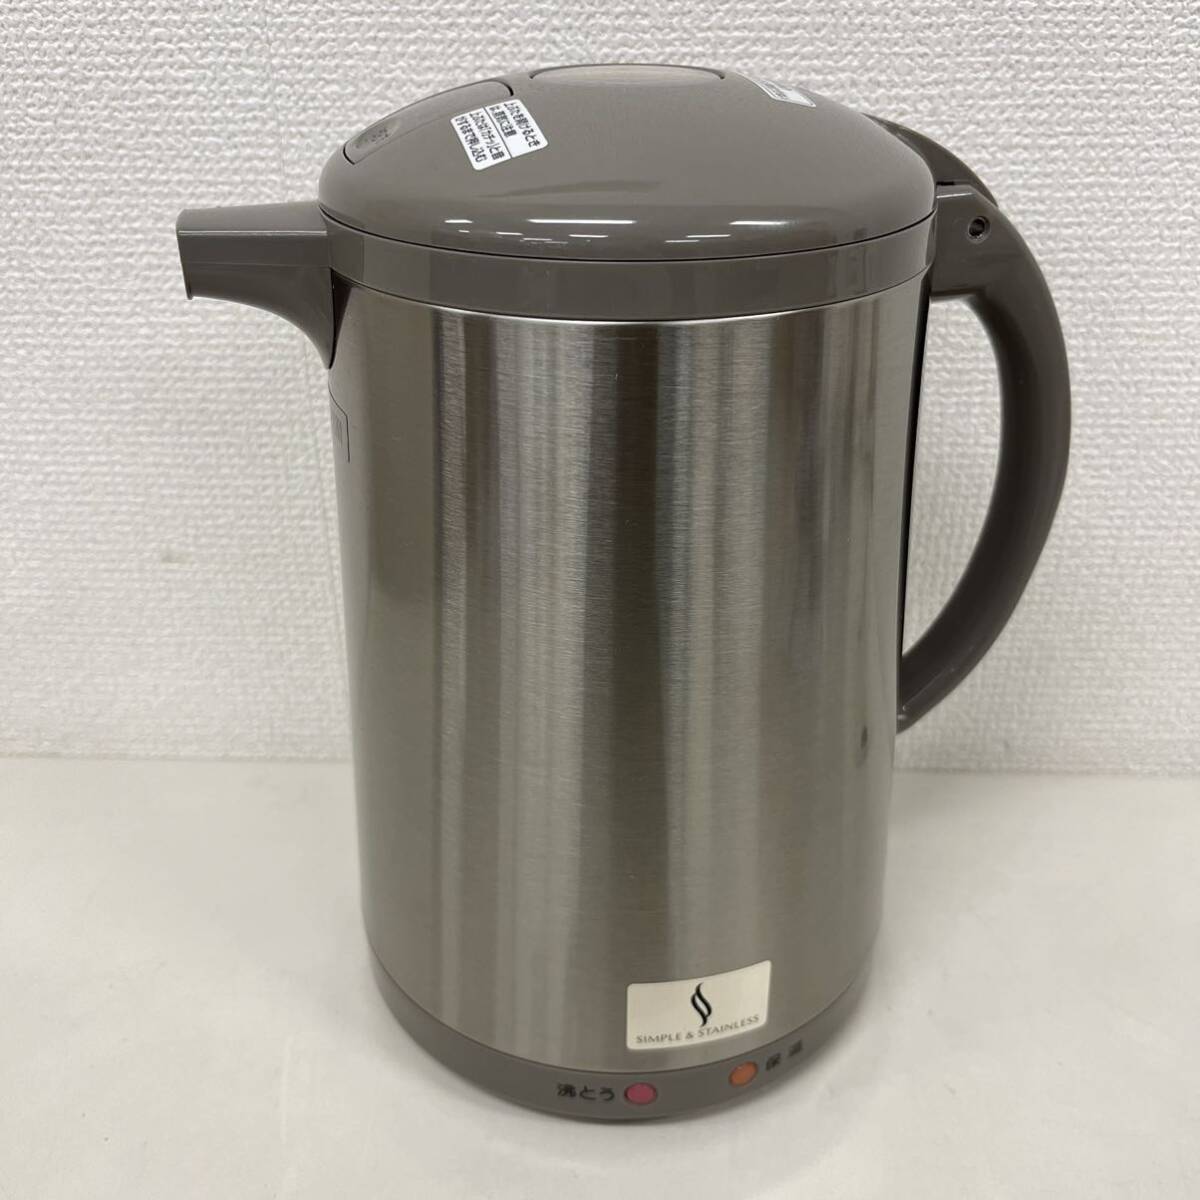  unused goods ZOJIRUSHI Zojirushi hot water dispenser CH-DT10-XJ 1L stainless steel Brown ma horn bin ... heat insulation 2020 year made 